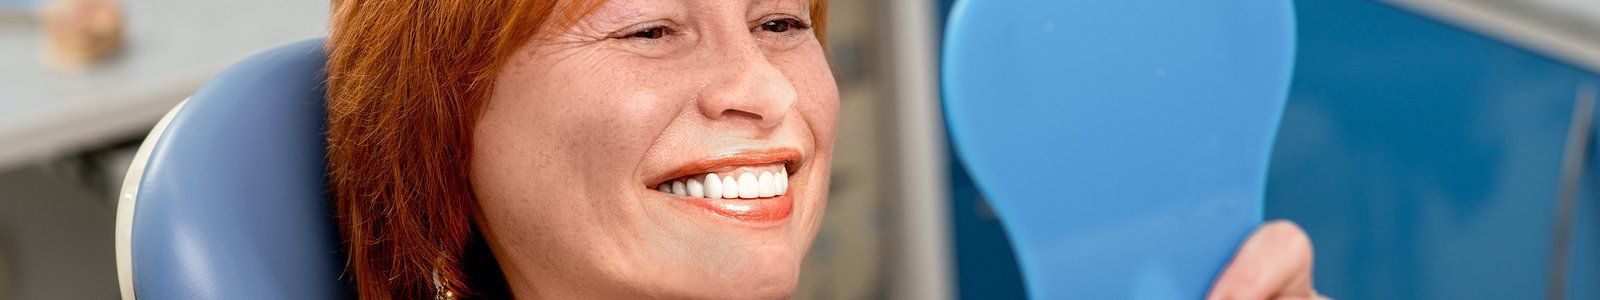 Implant Removable Dentures